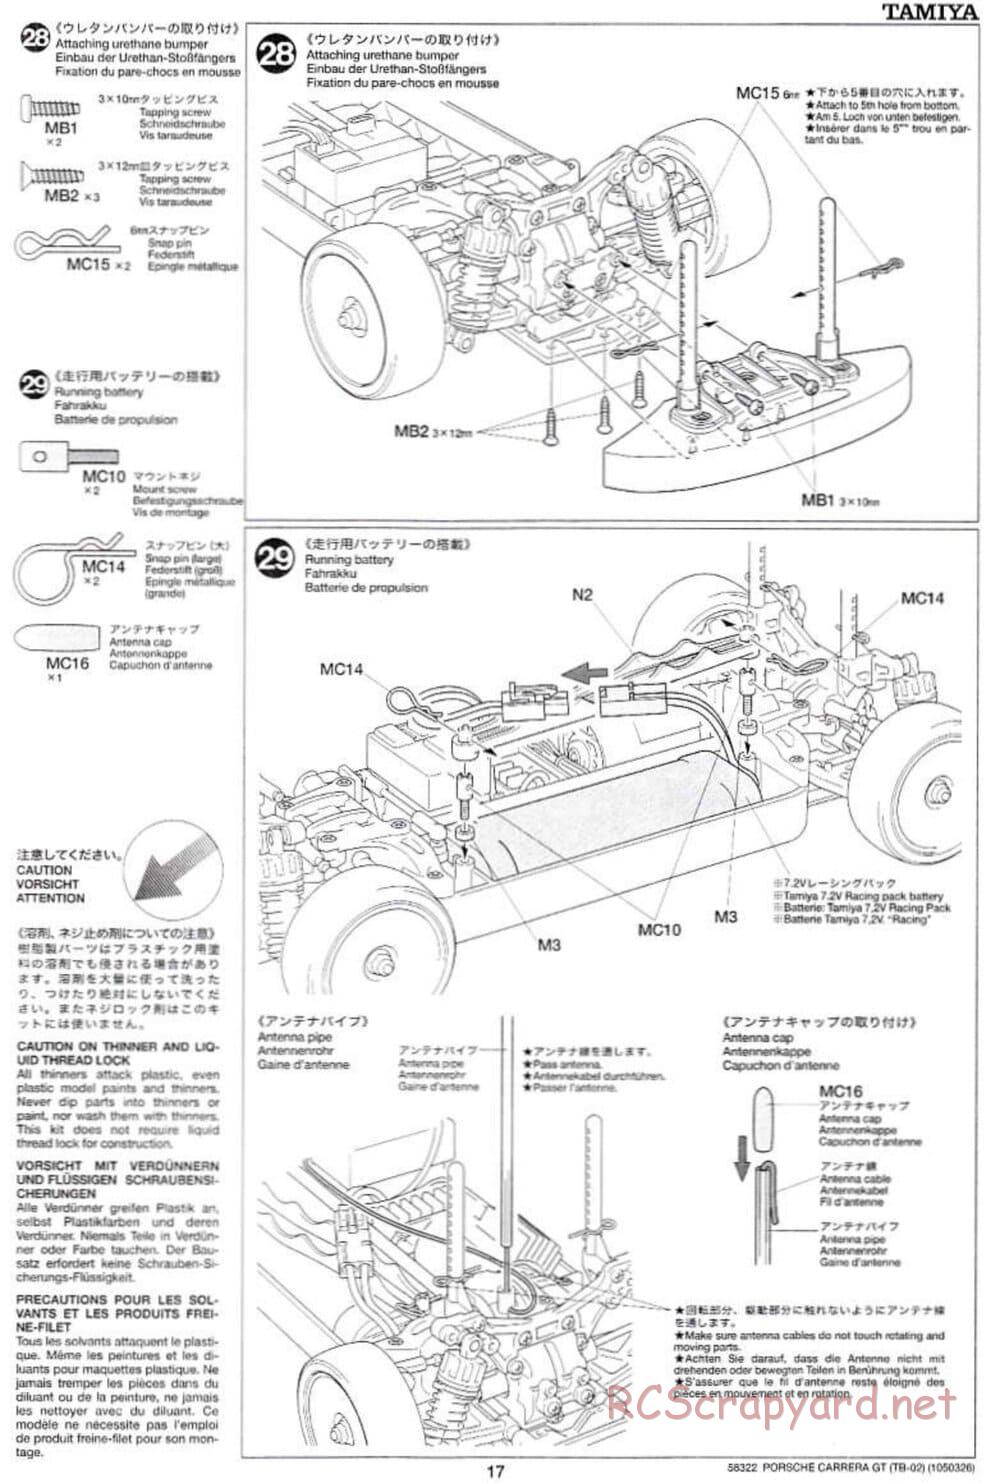 Tamiya - Porsche Carrera GT - TB-02 Chassis - Manual - Page 17